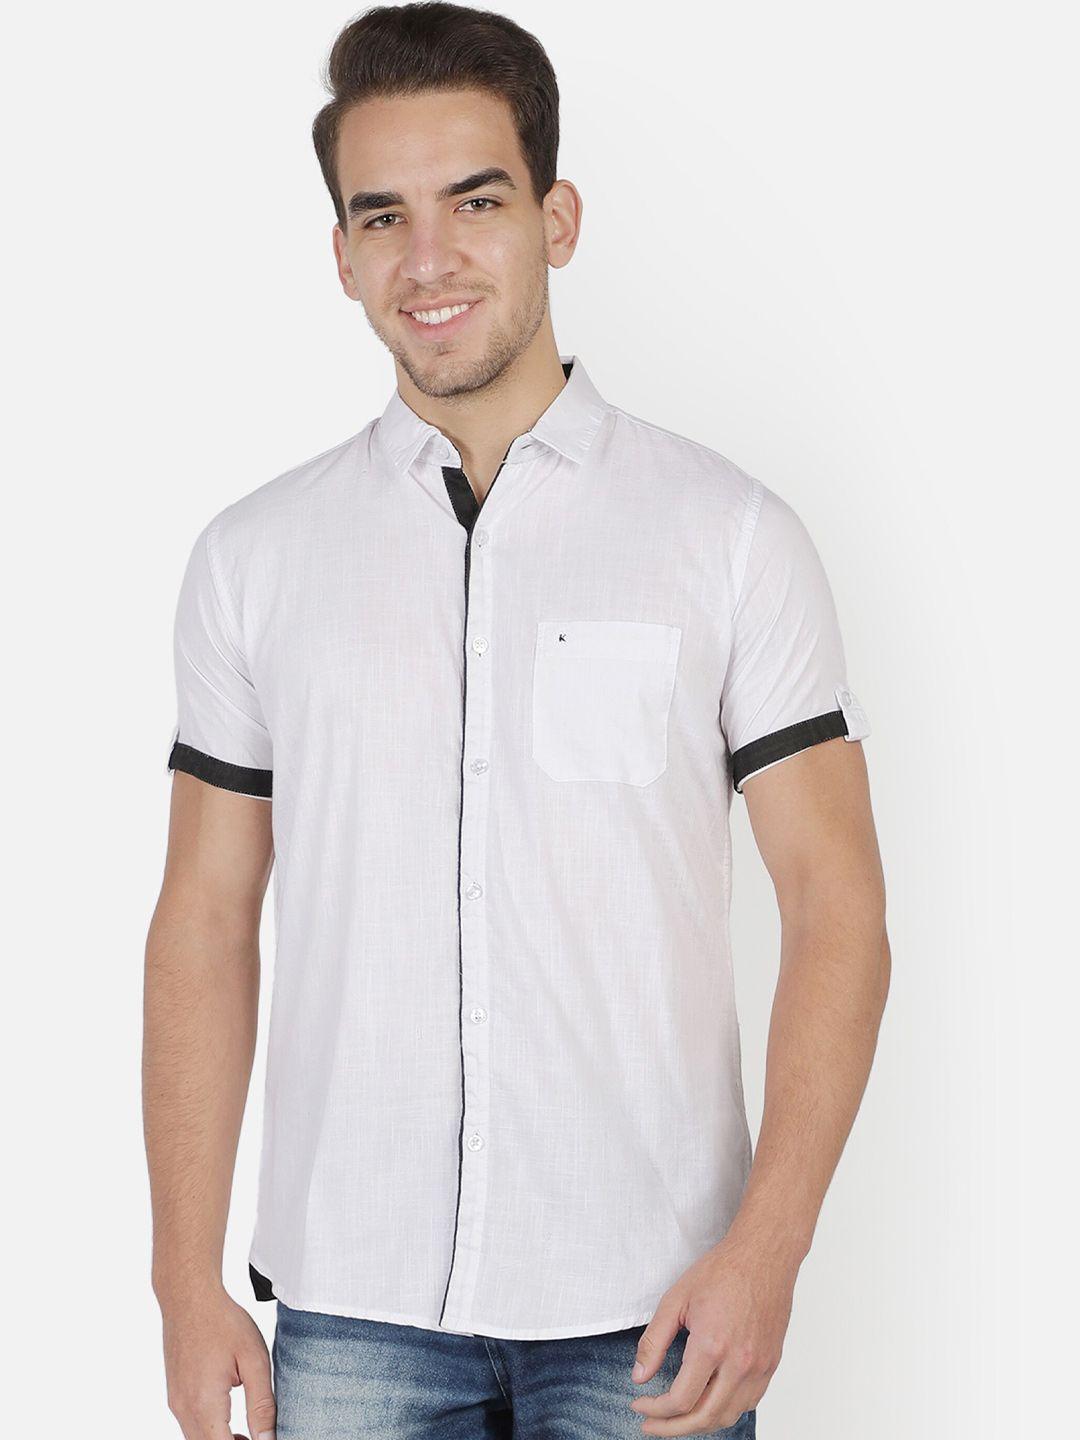 kuons-avenue-men-white-smart-slim-fit-casual-shirt